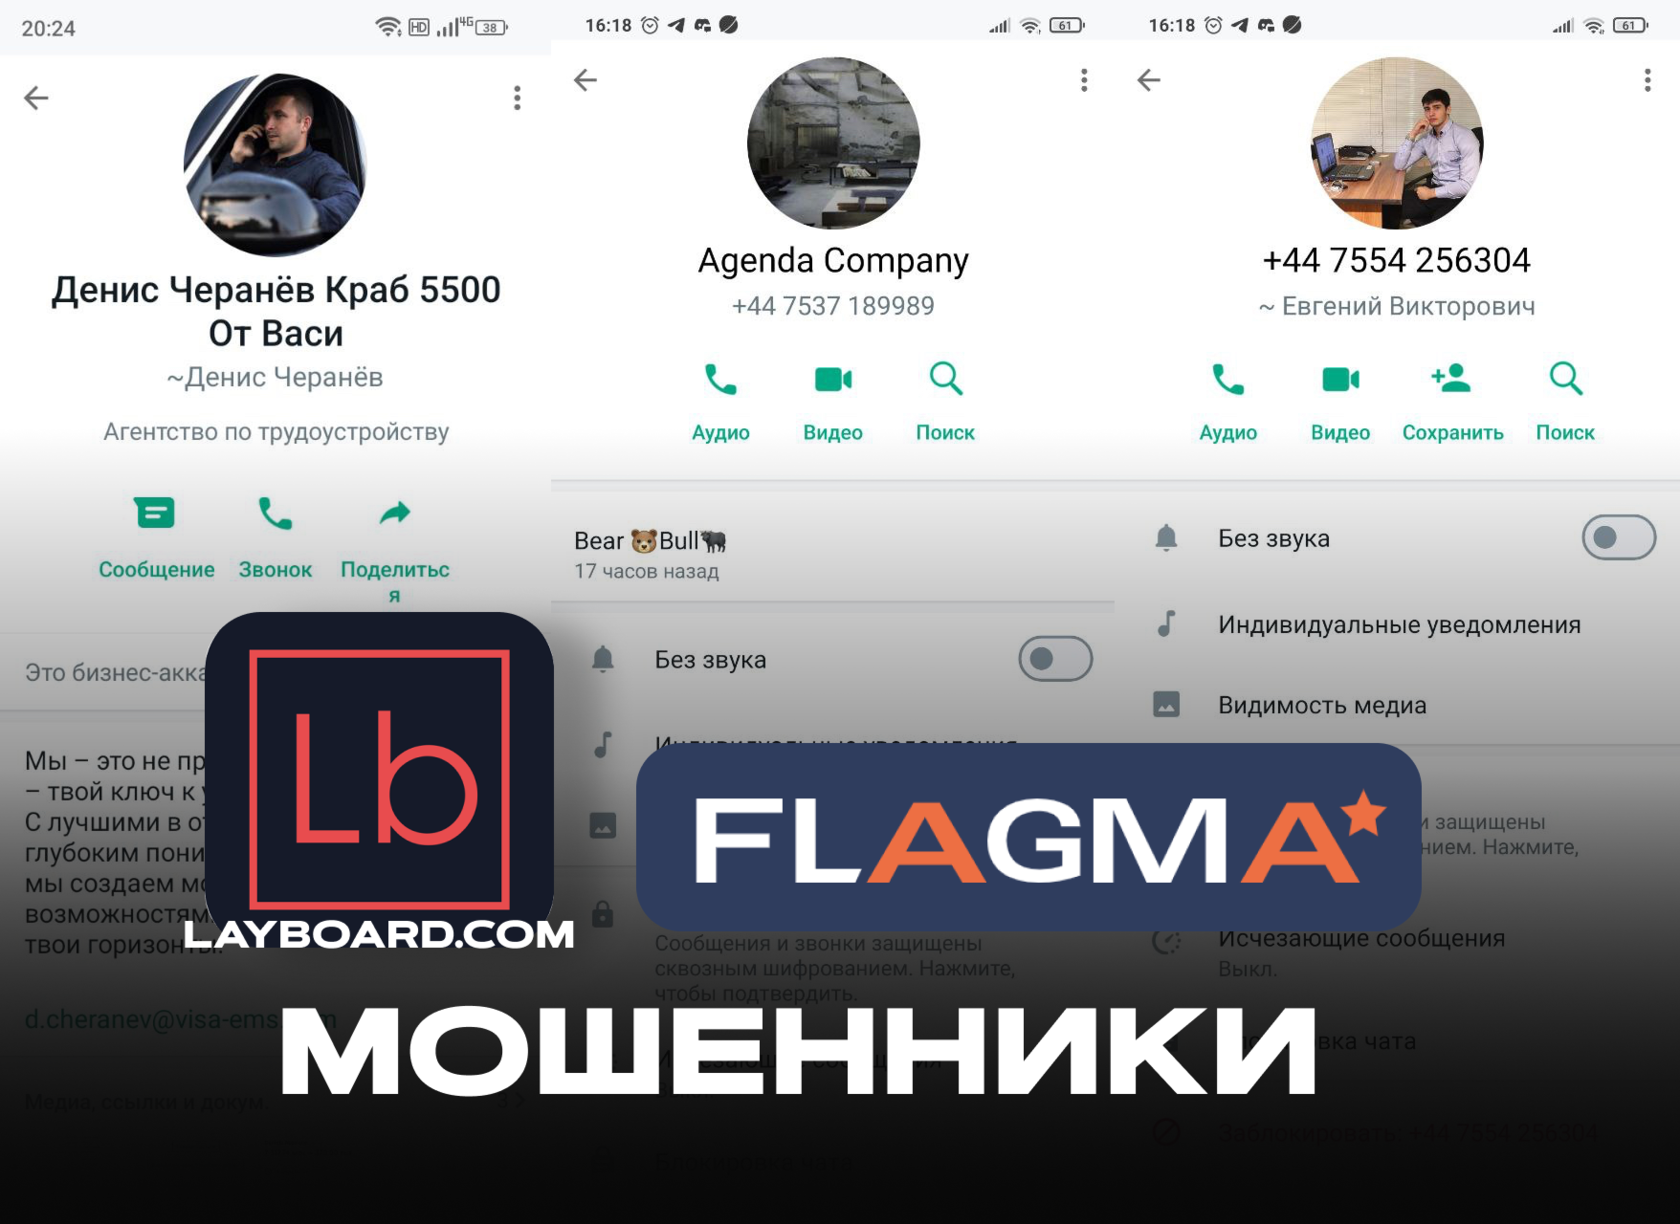 Layboard.com, Flagma.com вакансии краболов - мошенники